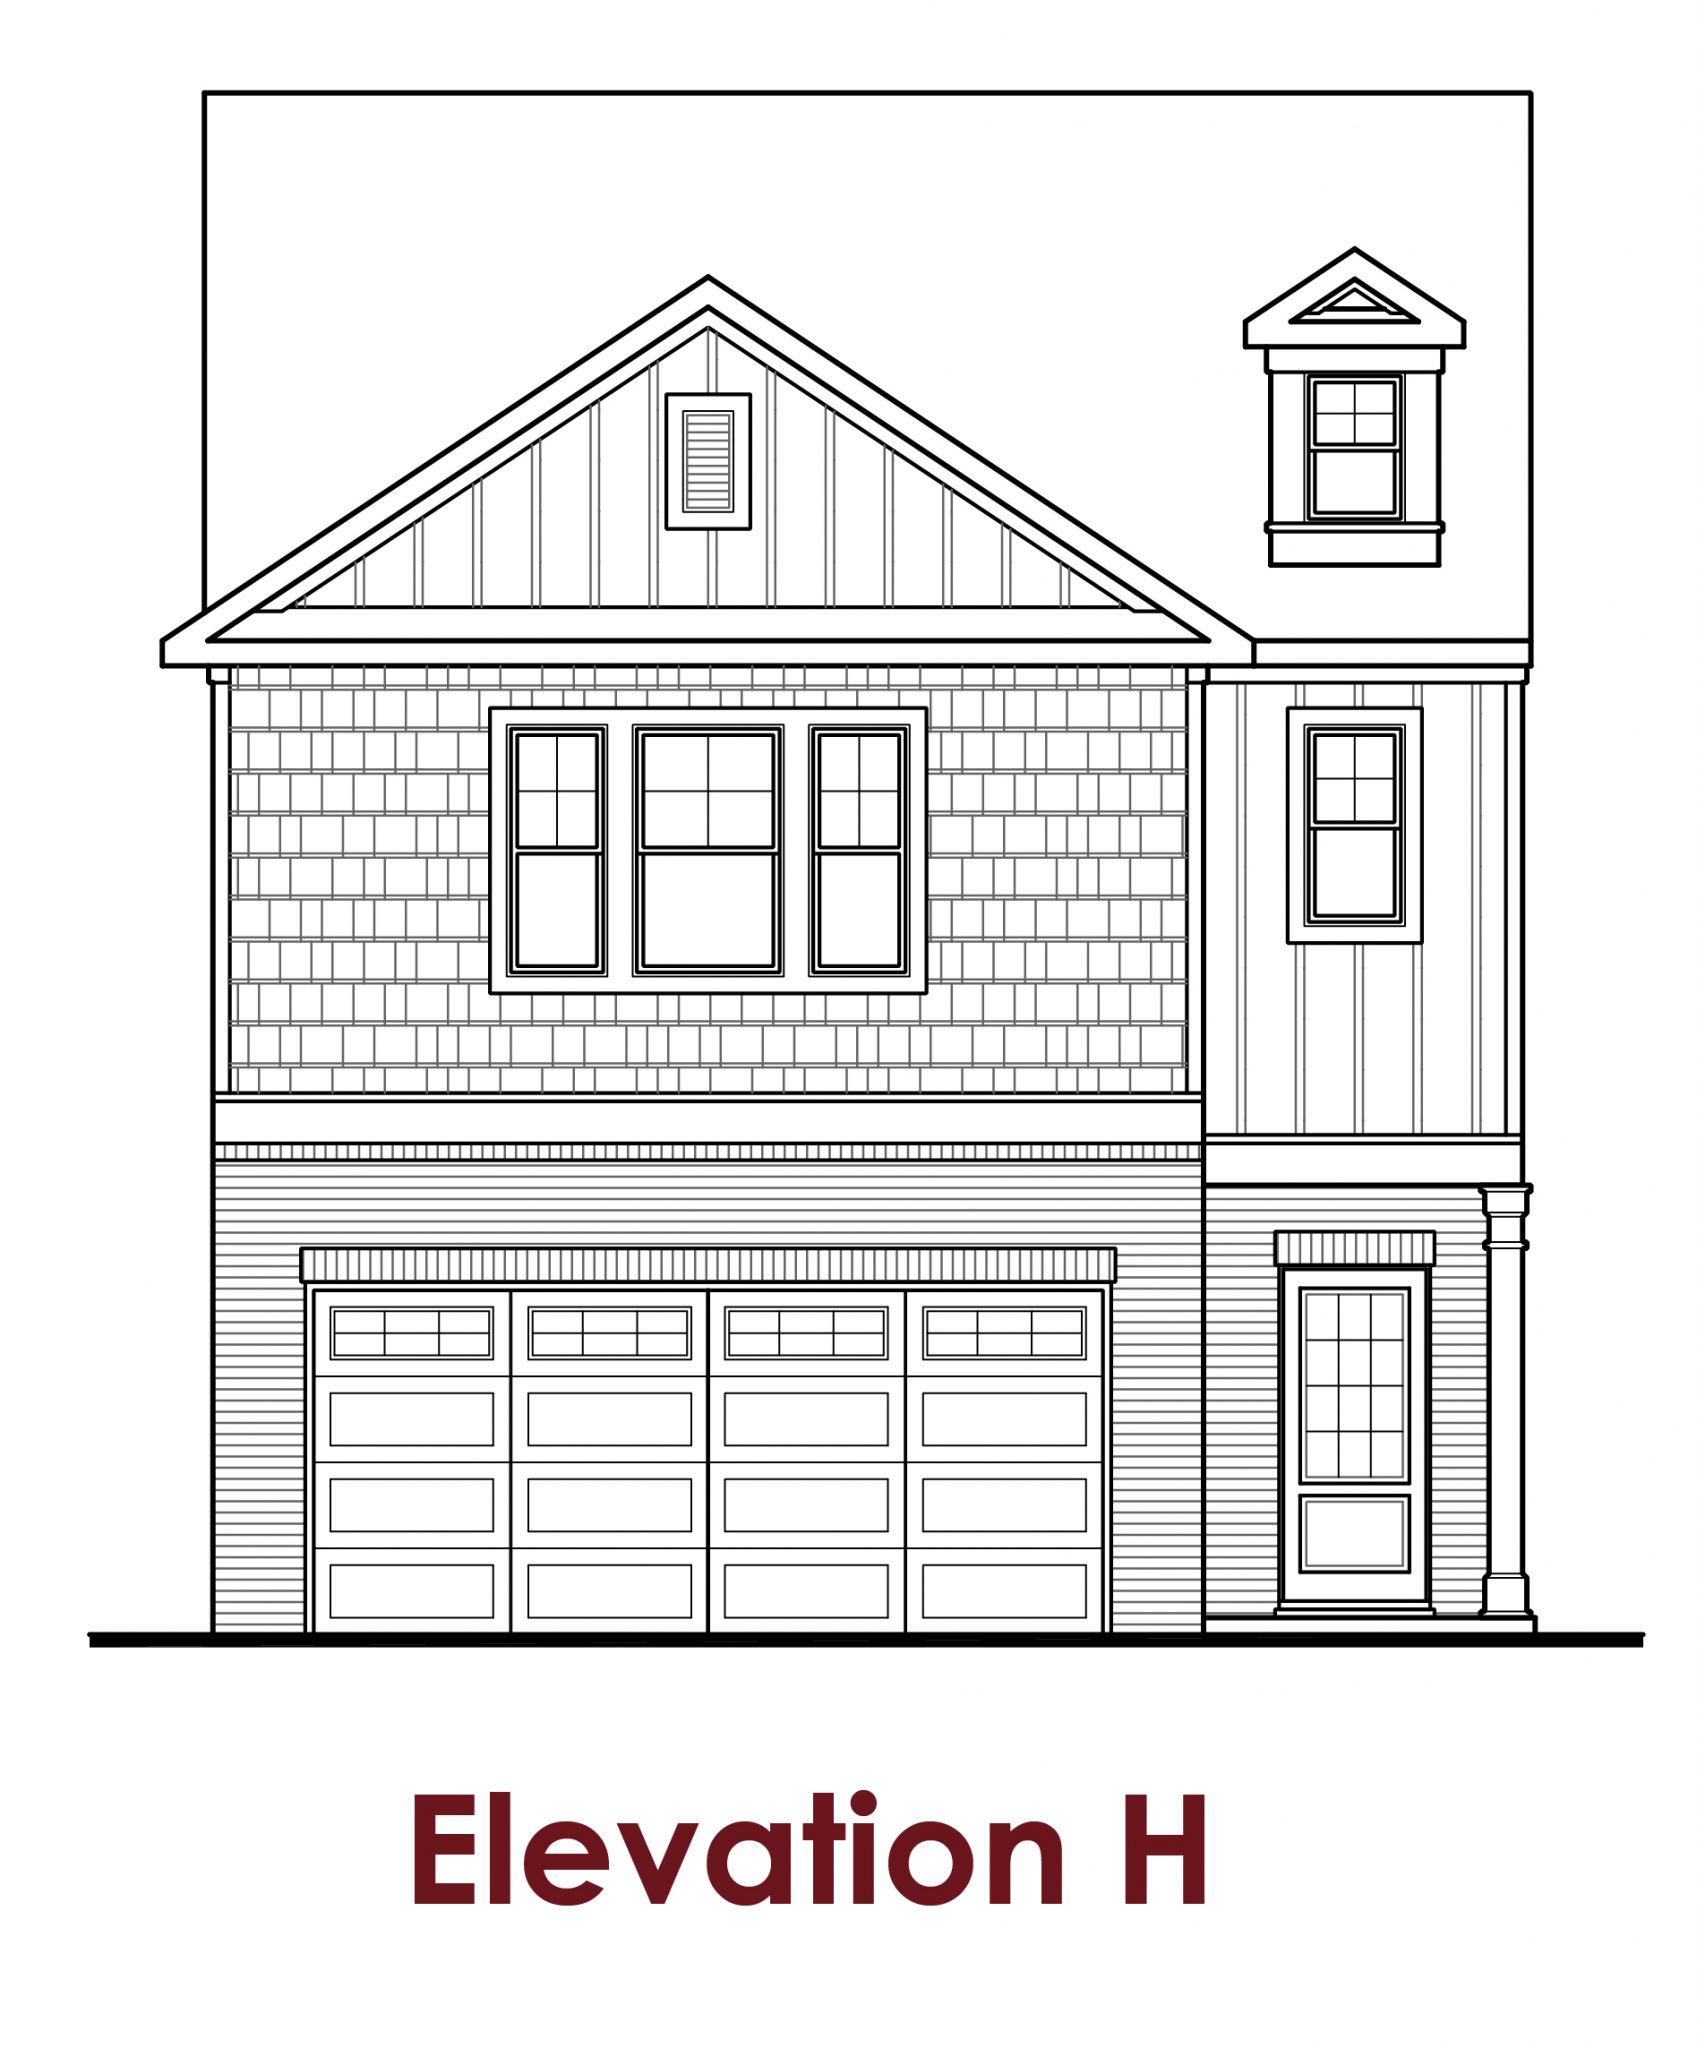 Davenport elevations Image